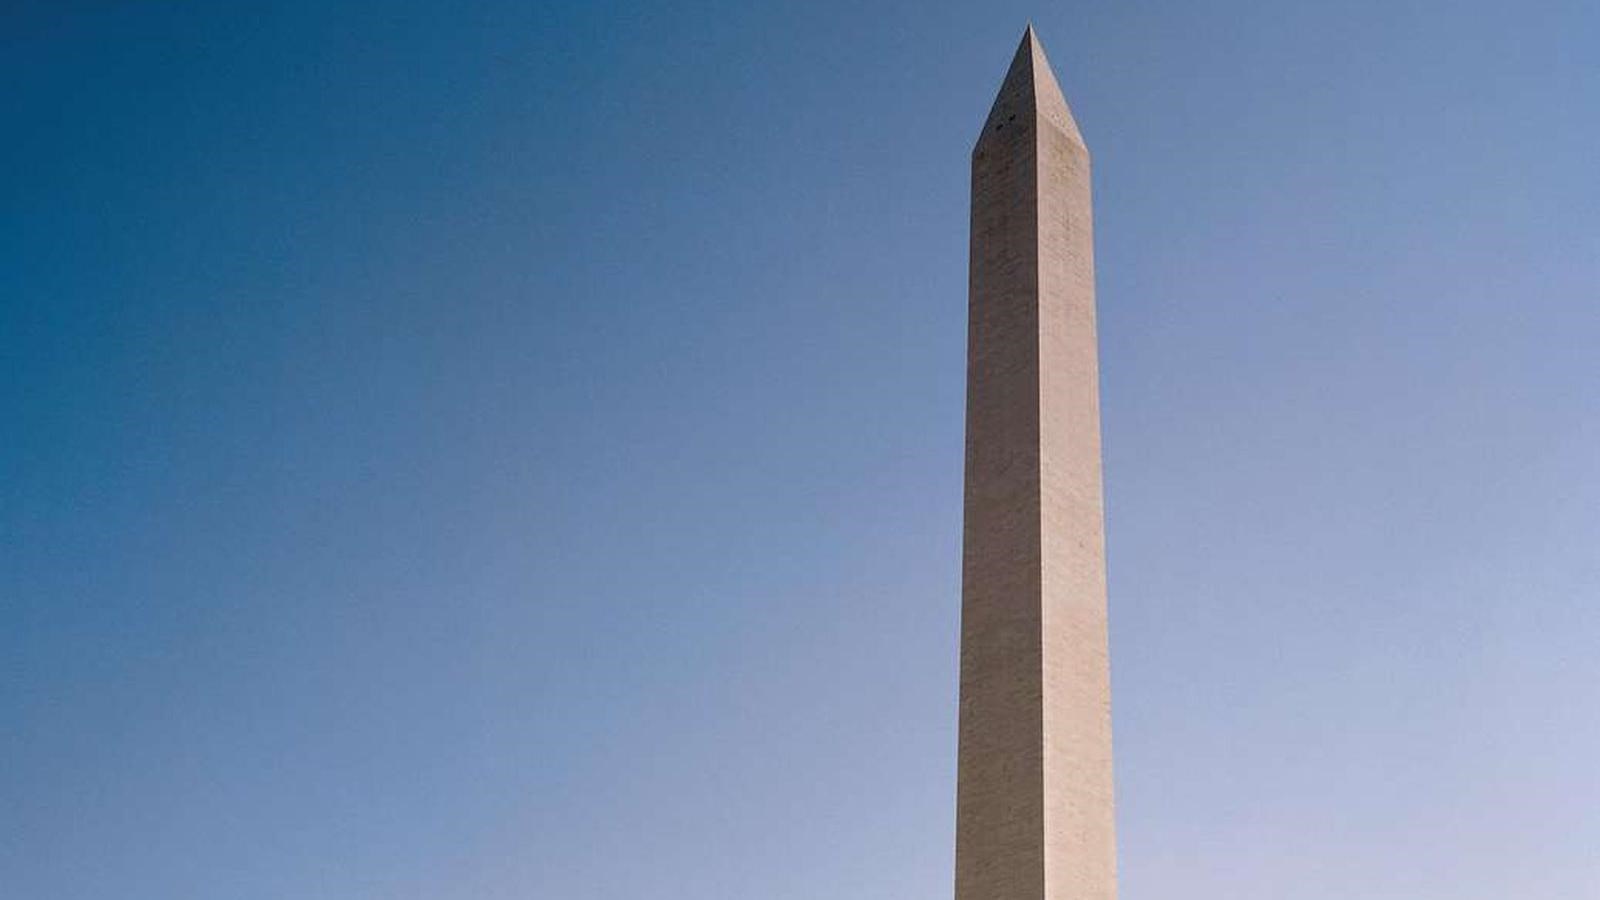 The tall stone Washington Monument obelisk.